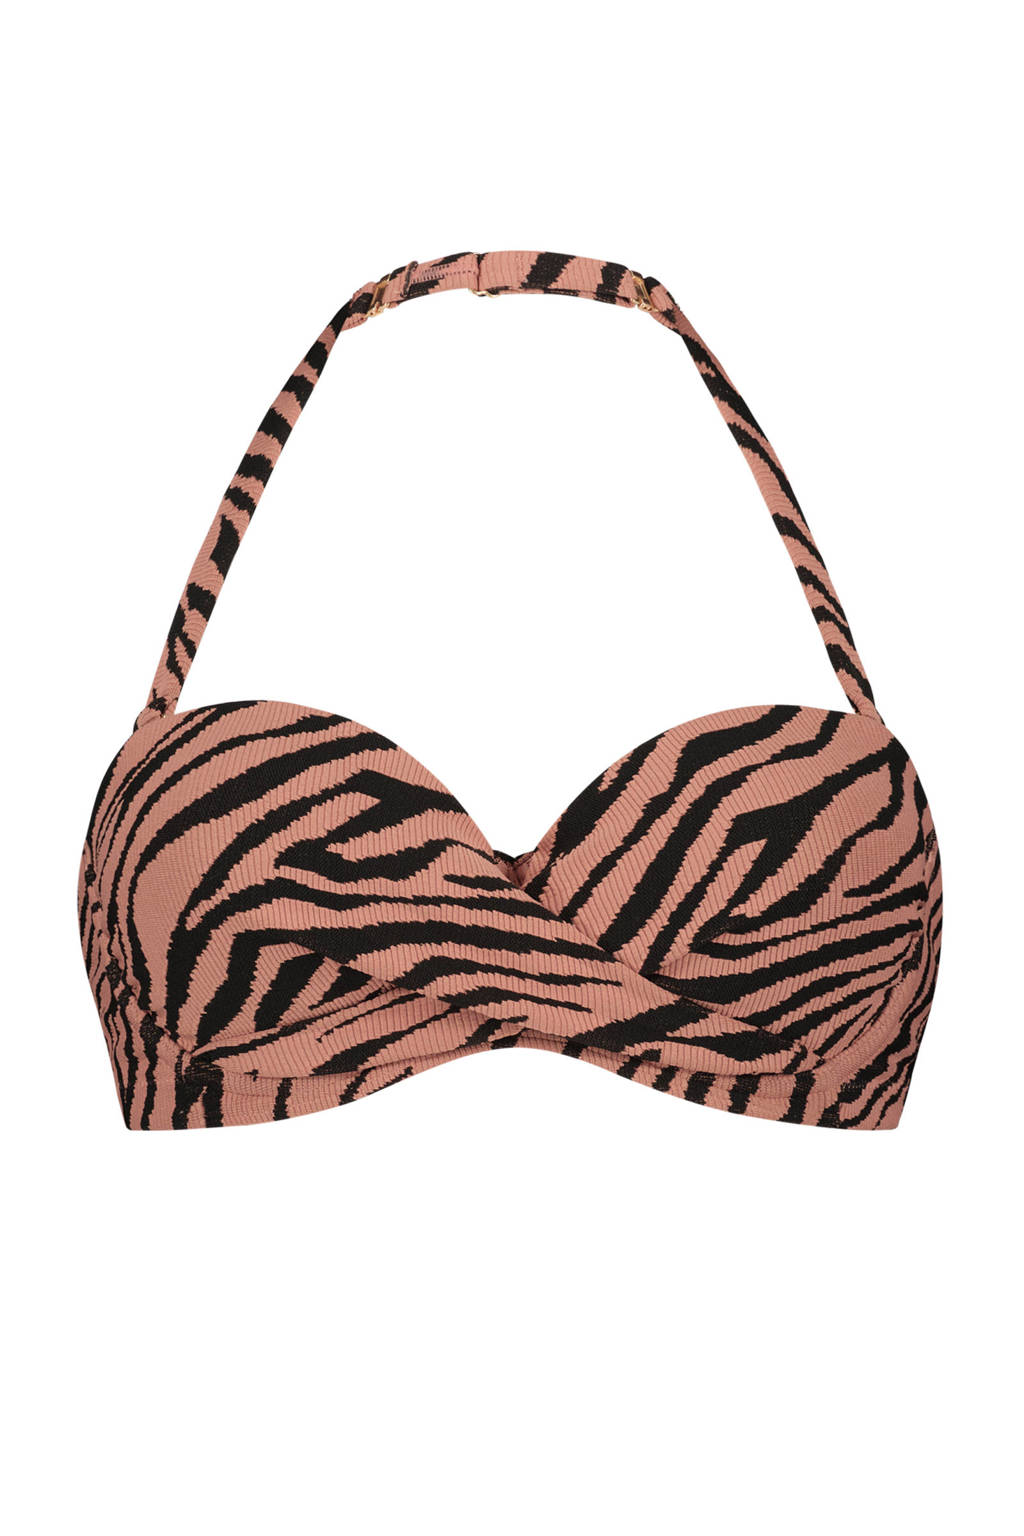 Beachlife strapless bandeau bikinitop met zebraprint zalmroze/zwart, Zalmroze/zwart